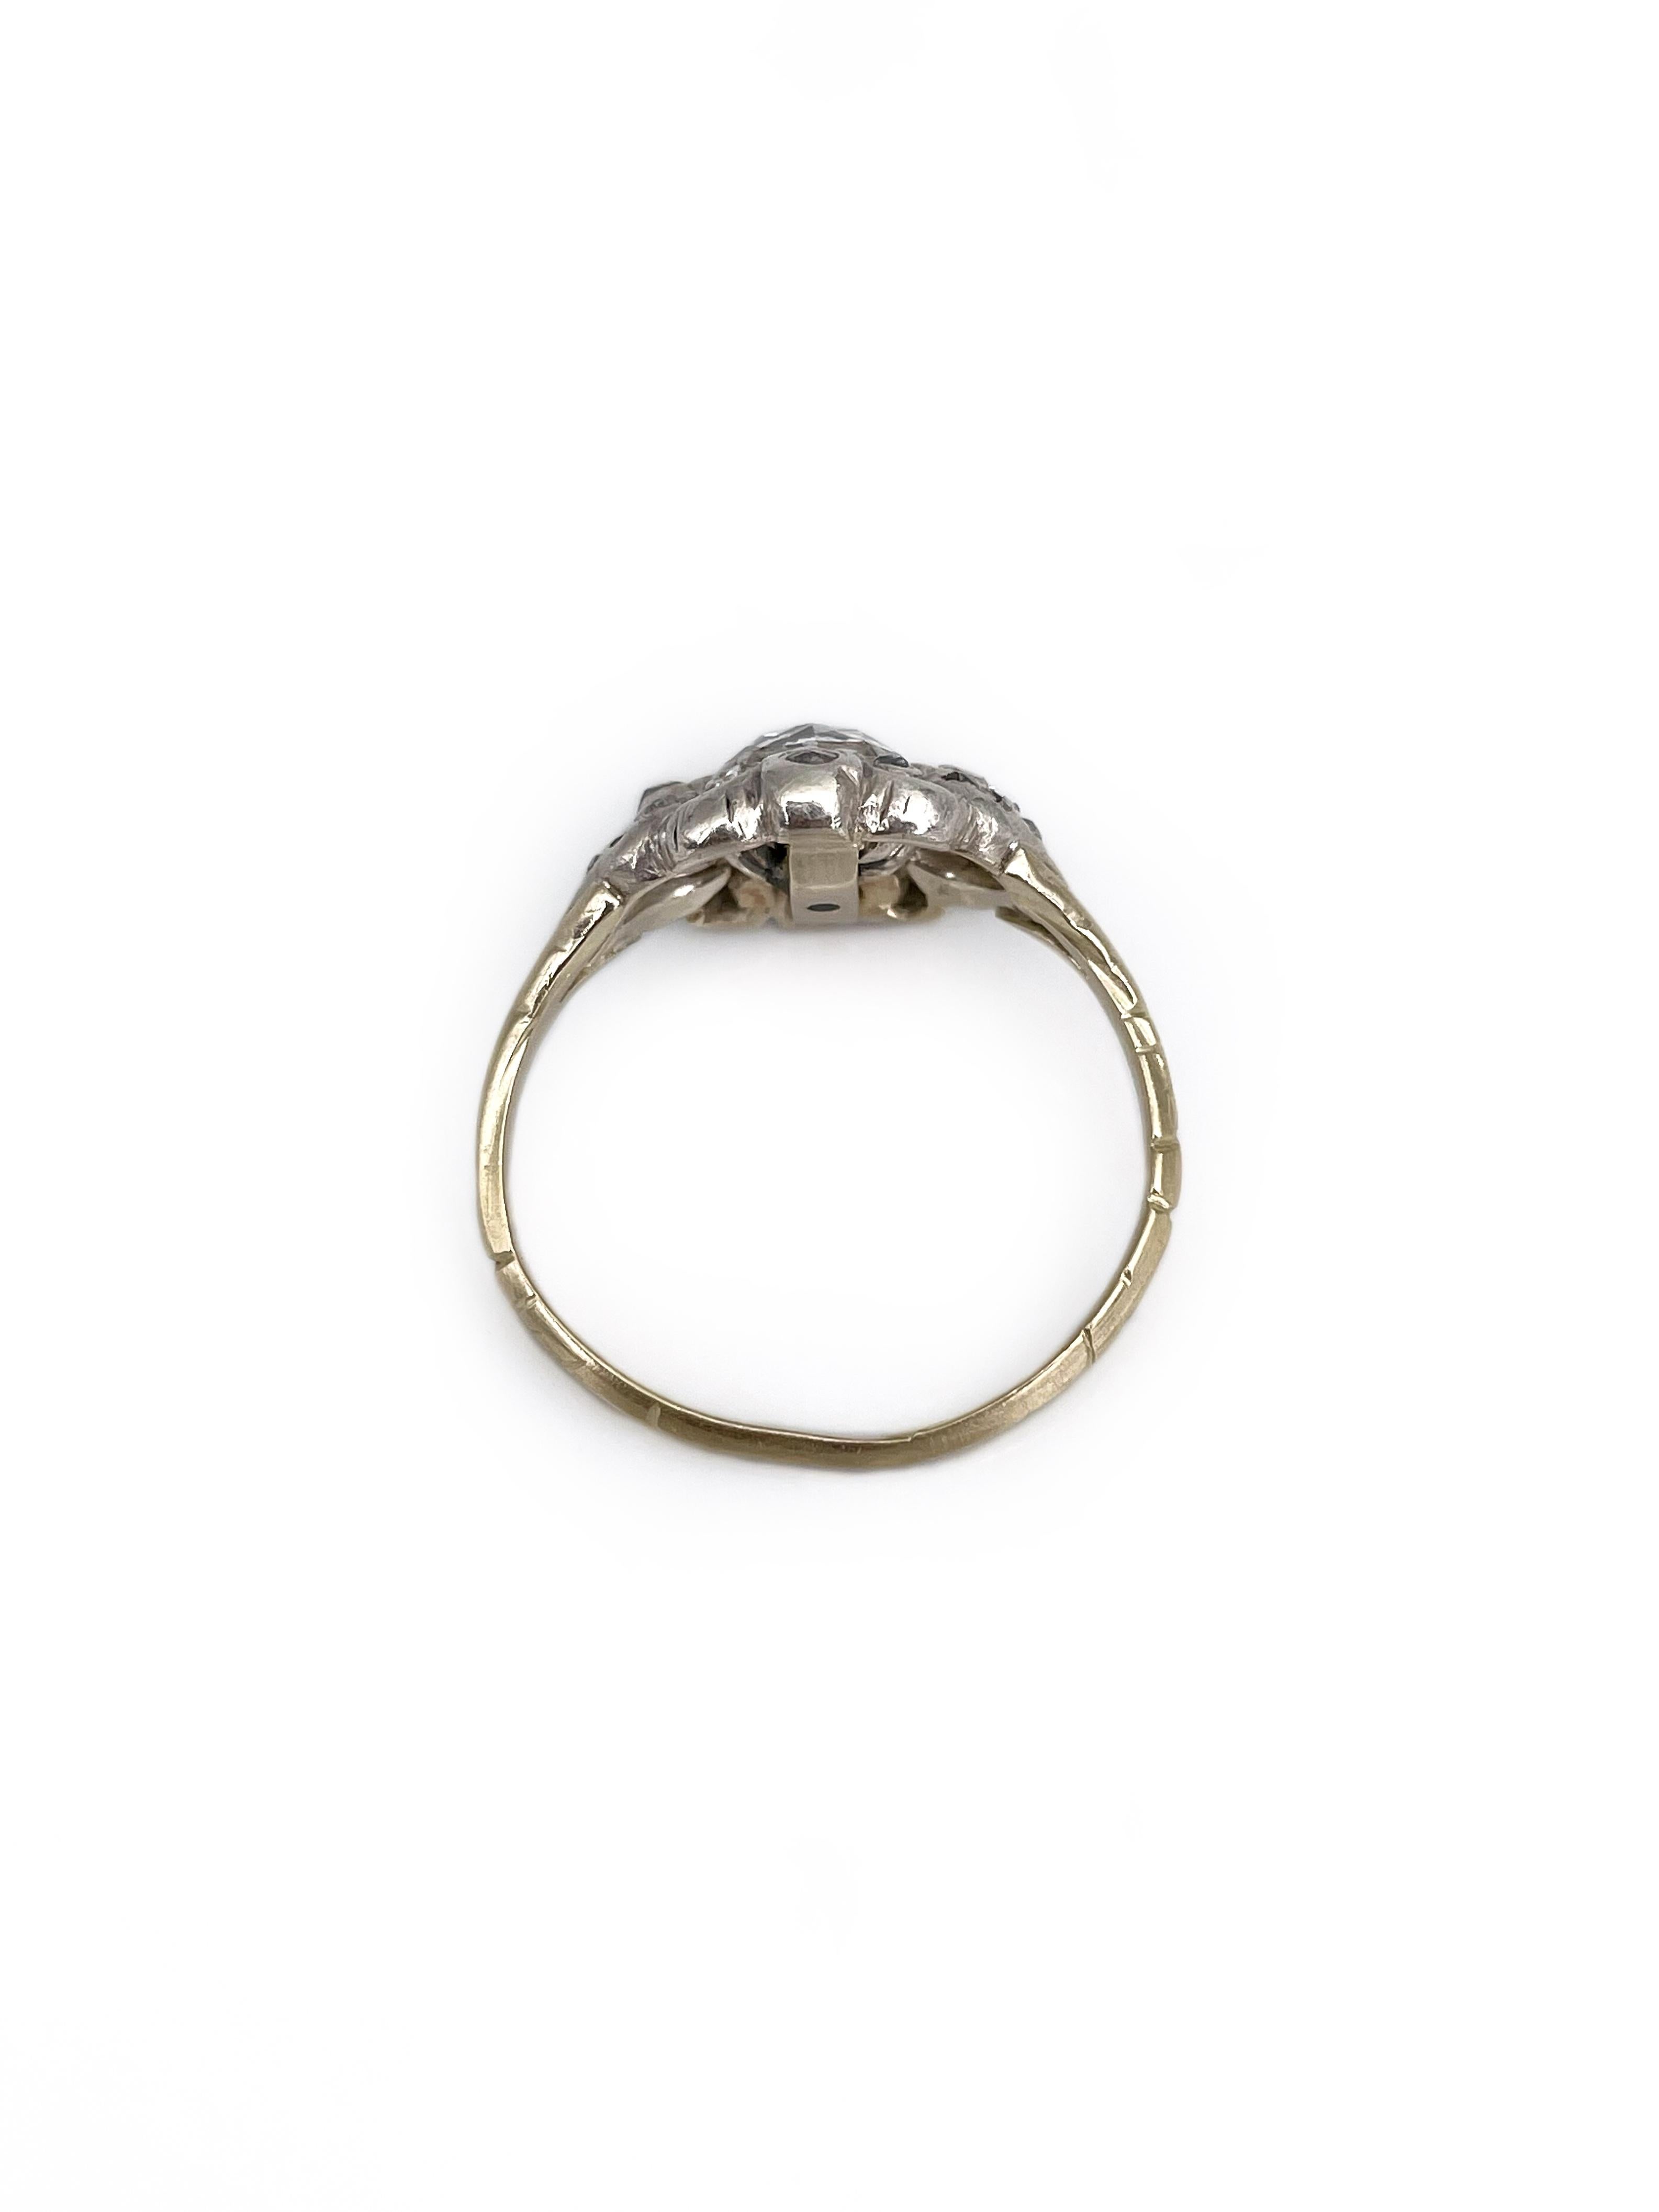 Antique Victorian 14K Gold Rose Cut Diamond Engagement Ring 3